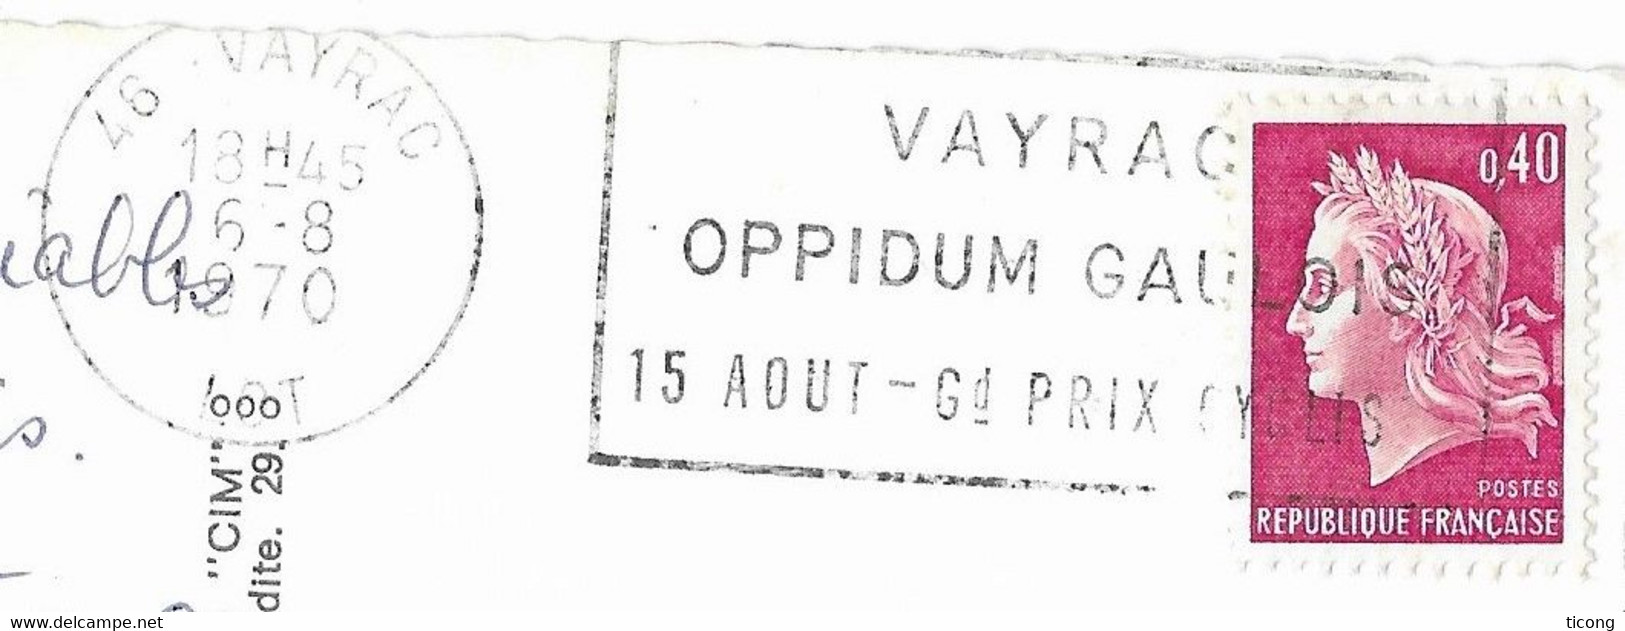 VAYRAC  LOT - VUE AERIENNE, DORDOGNE, CAMP CCAS - FLAMME OPPIDUM GAULOIS, GRAND PRIX CYCLISTE - A CIRCULEE EN 1970 - Vayrac